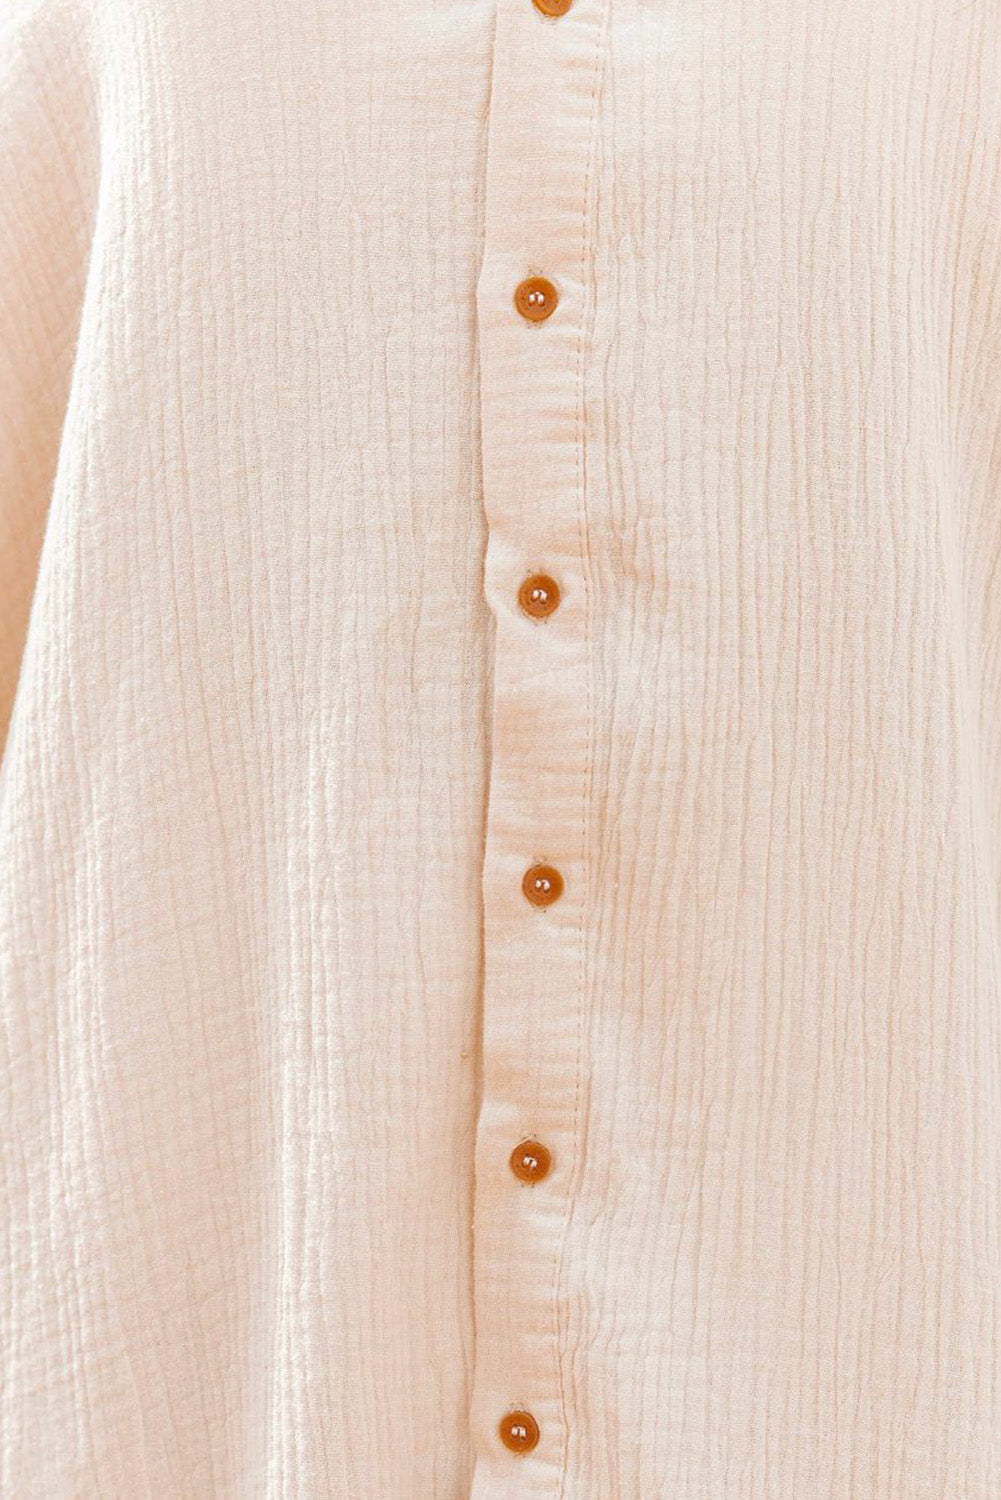 Slit Button Up Shirt Dress - The Teal Antler Boutique